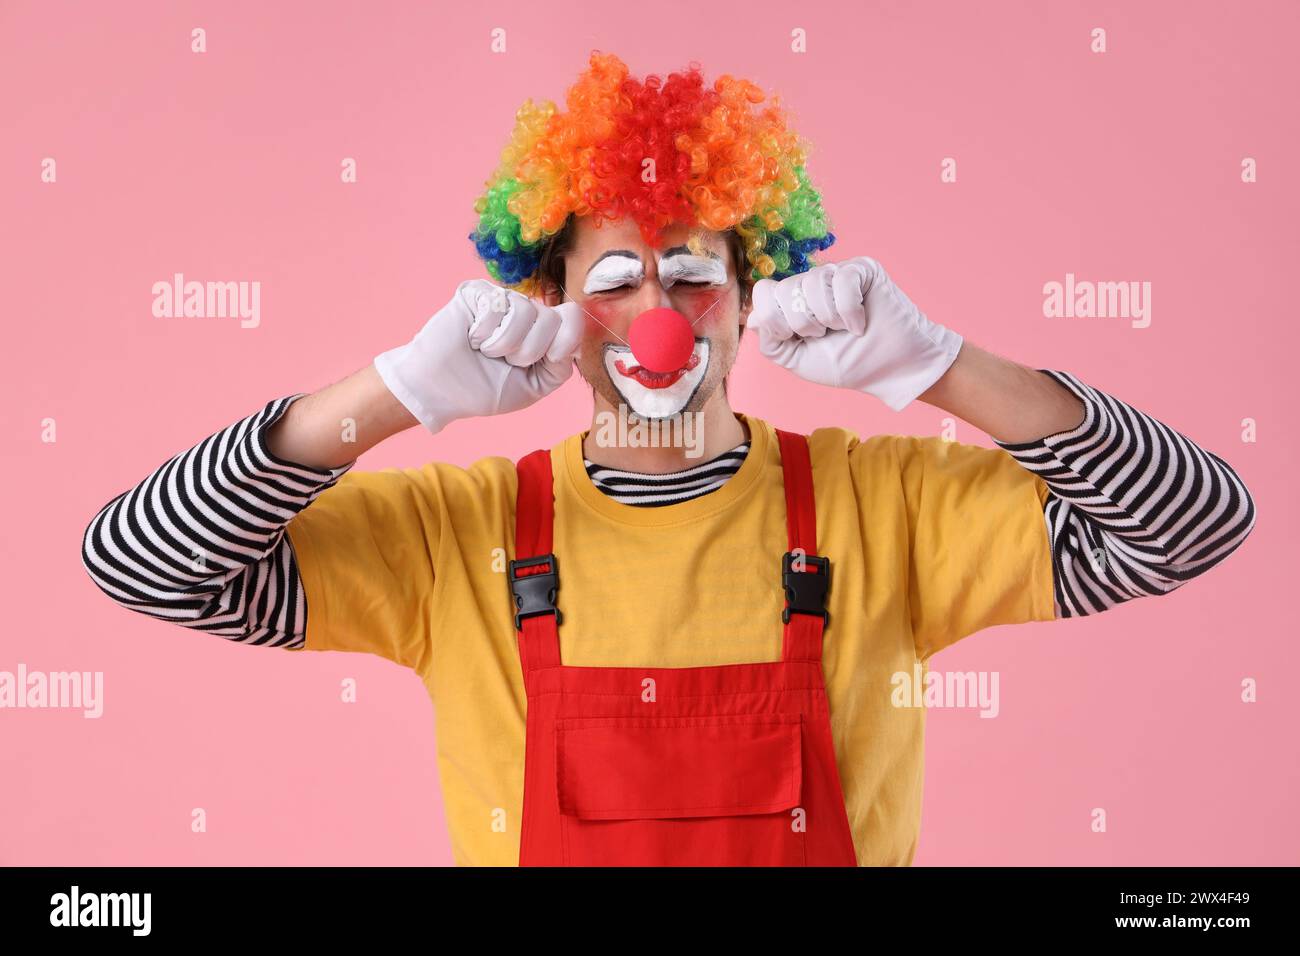 Portrait of sad clown on pink background. April Fool's day celebration Stock Photo